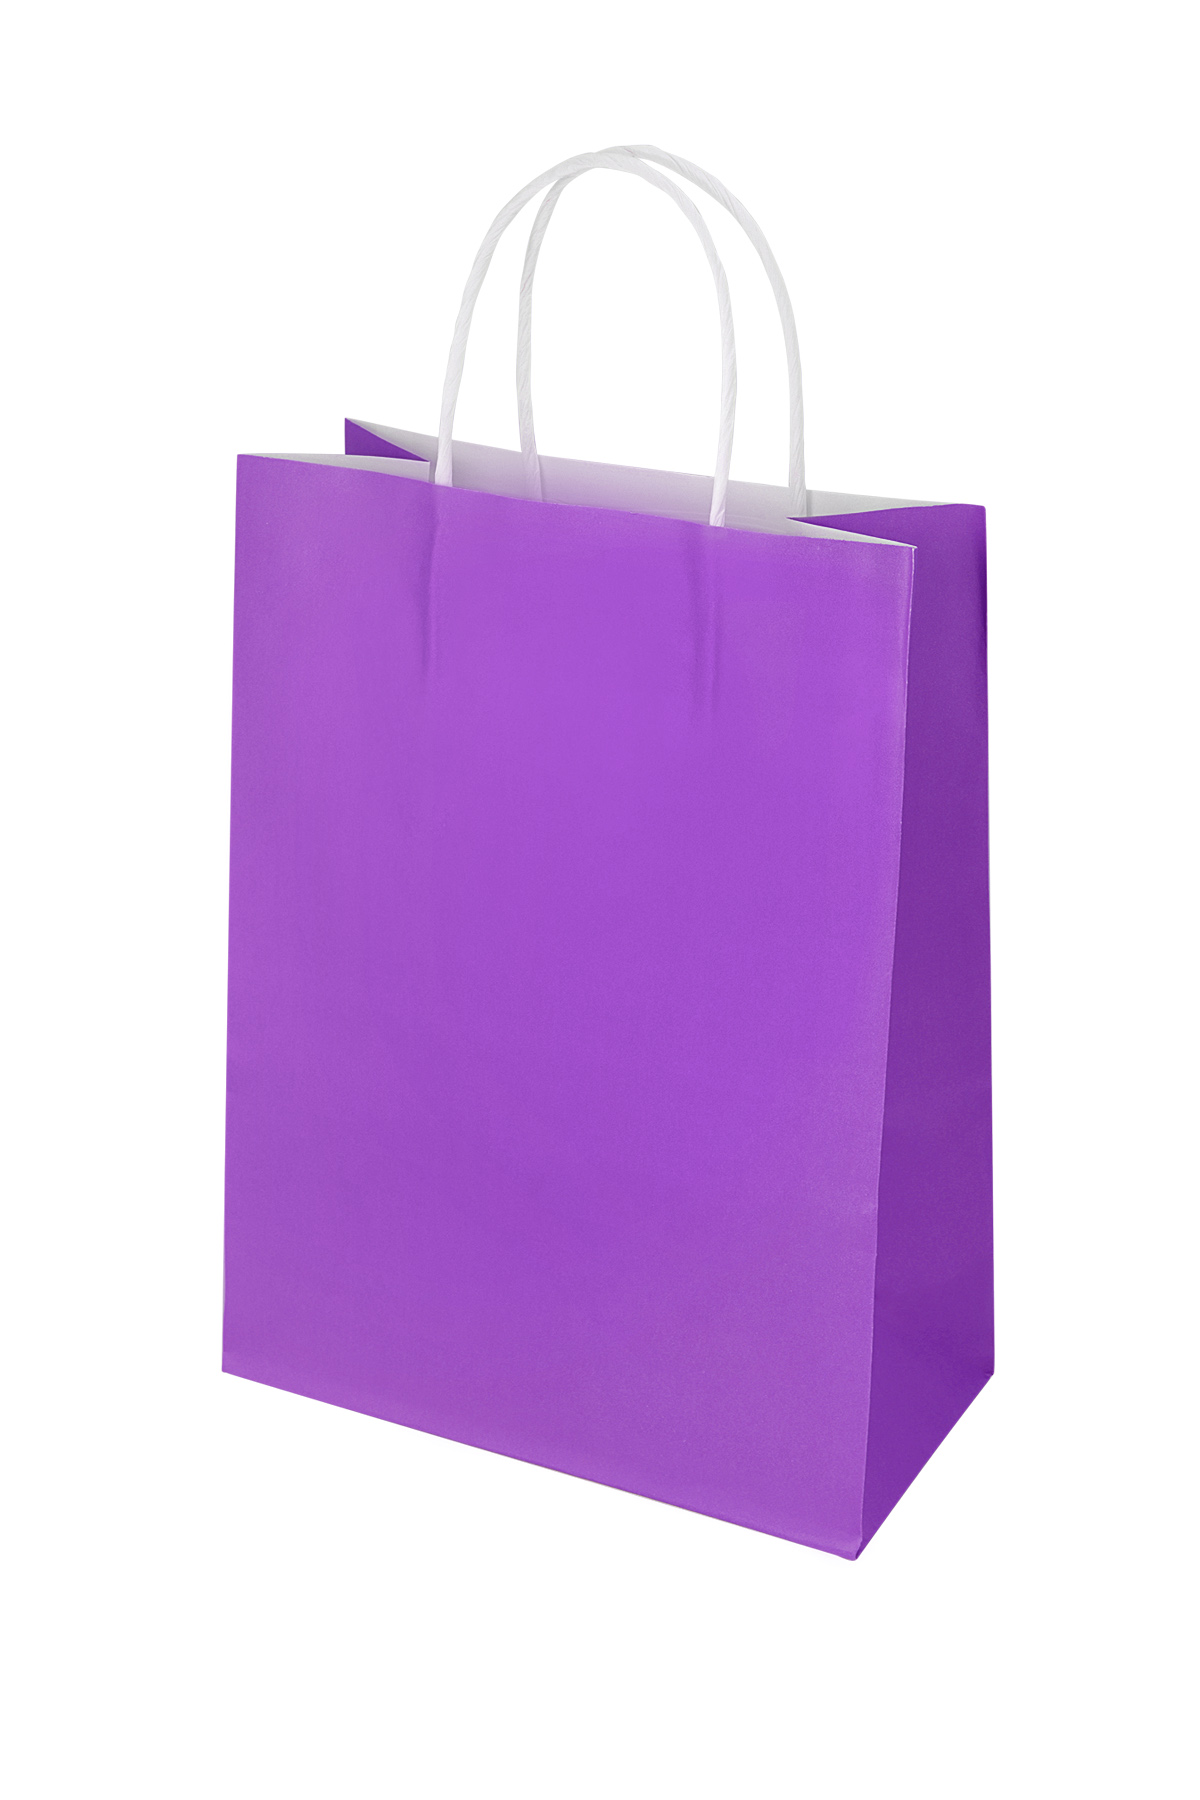 Bolsas lisas 50 piezas grandes - Papel violeta h5 